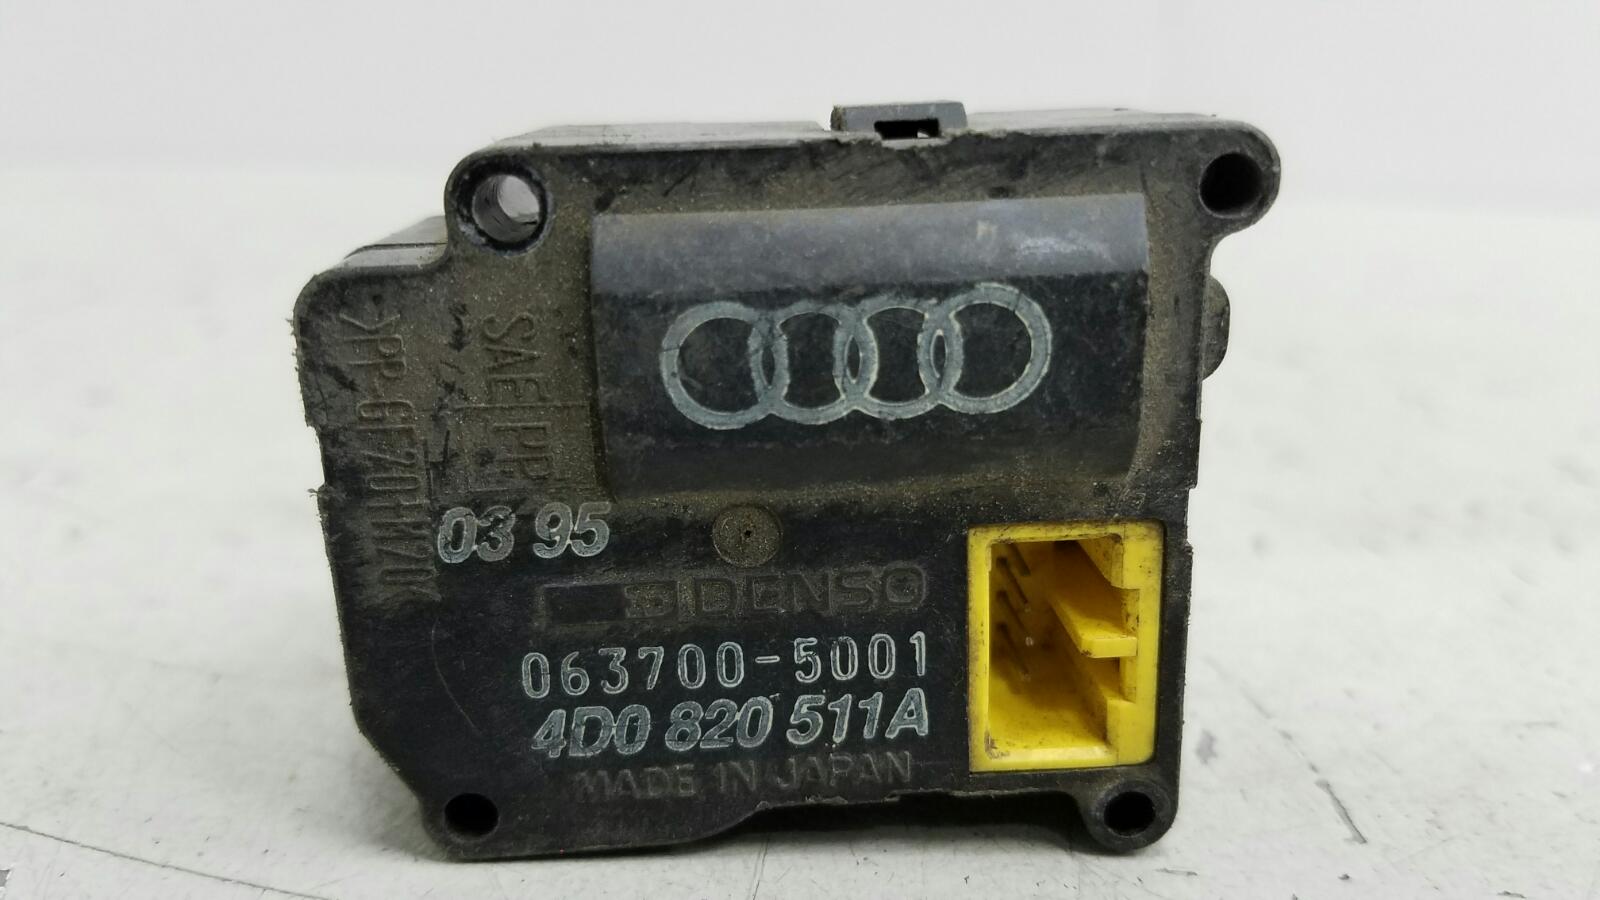 Моторчик заслонки печки Audi A8 1996 D2 ABZ 4.2л 0637005001 Б/У